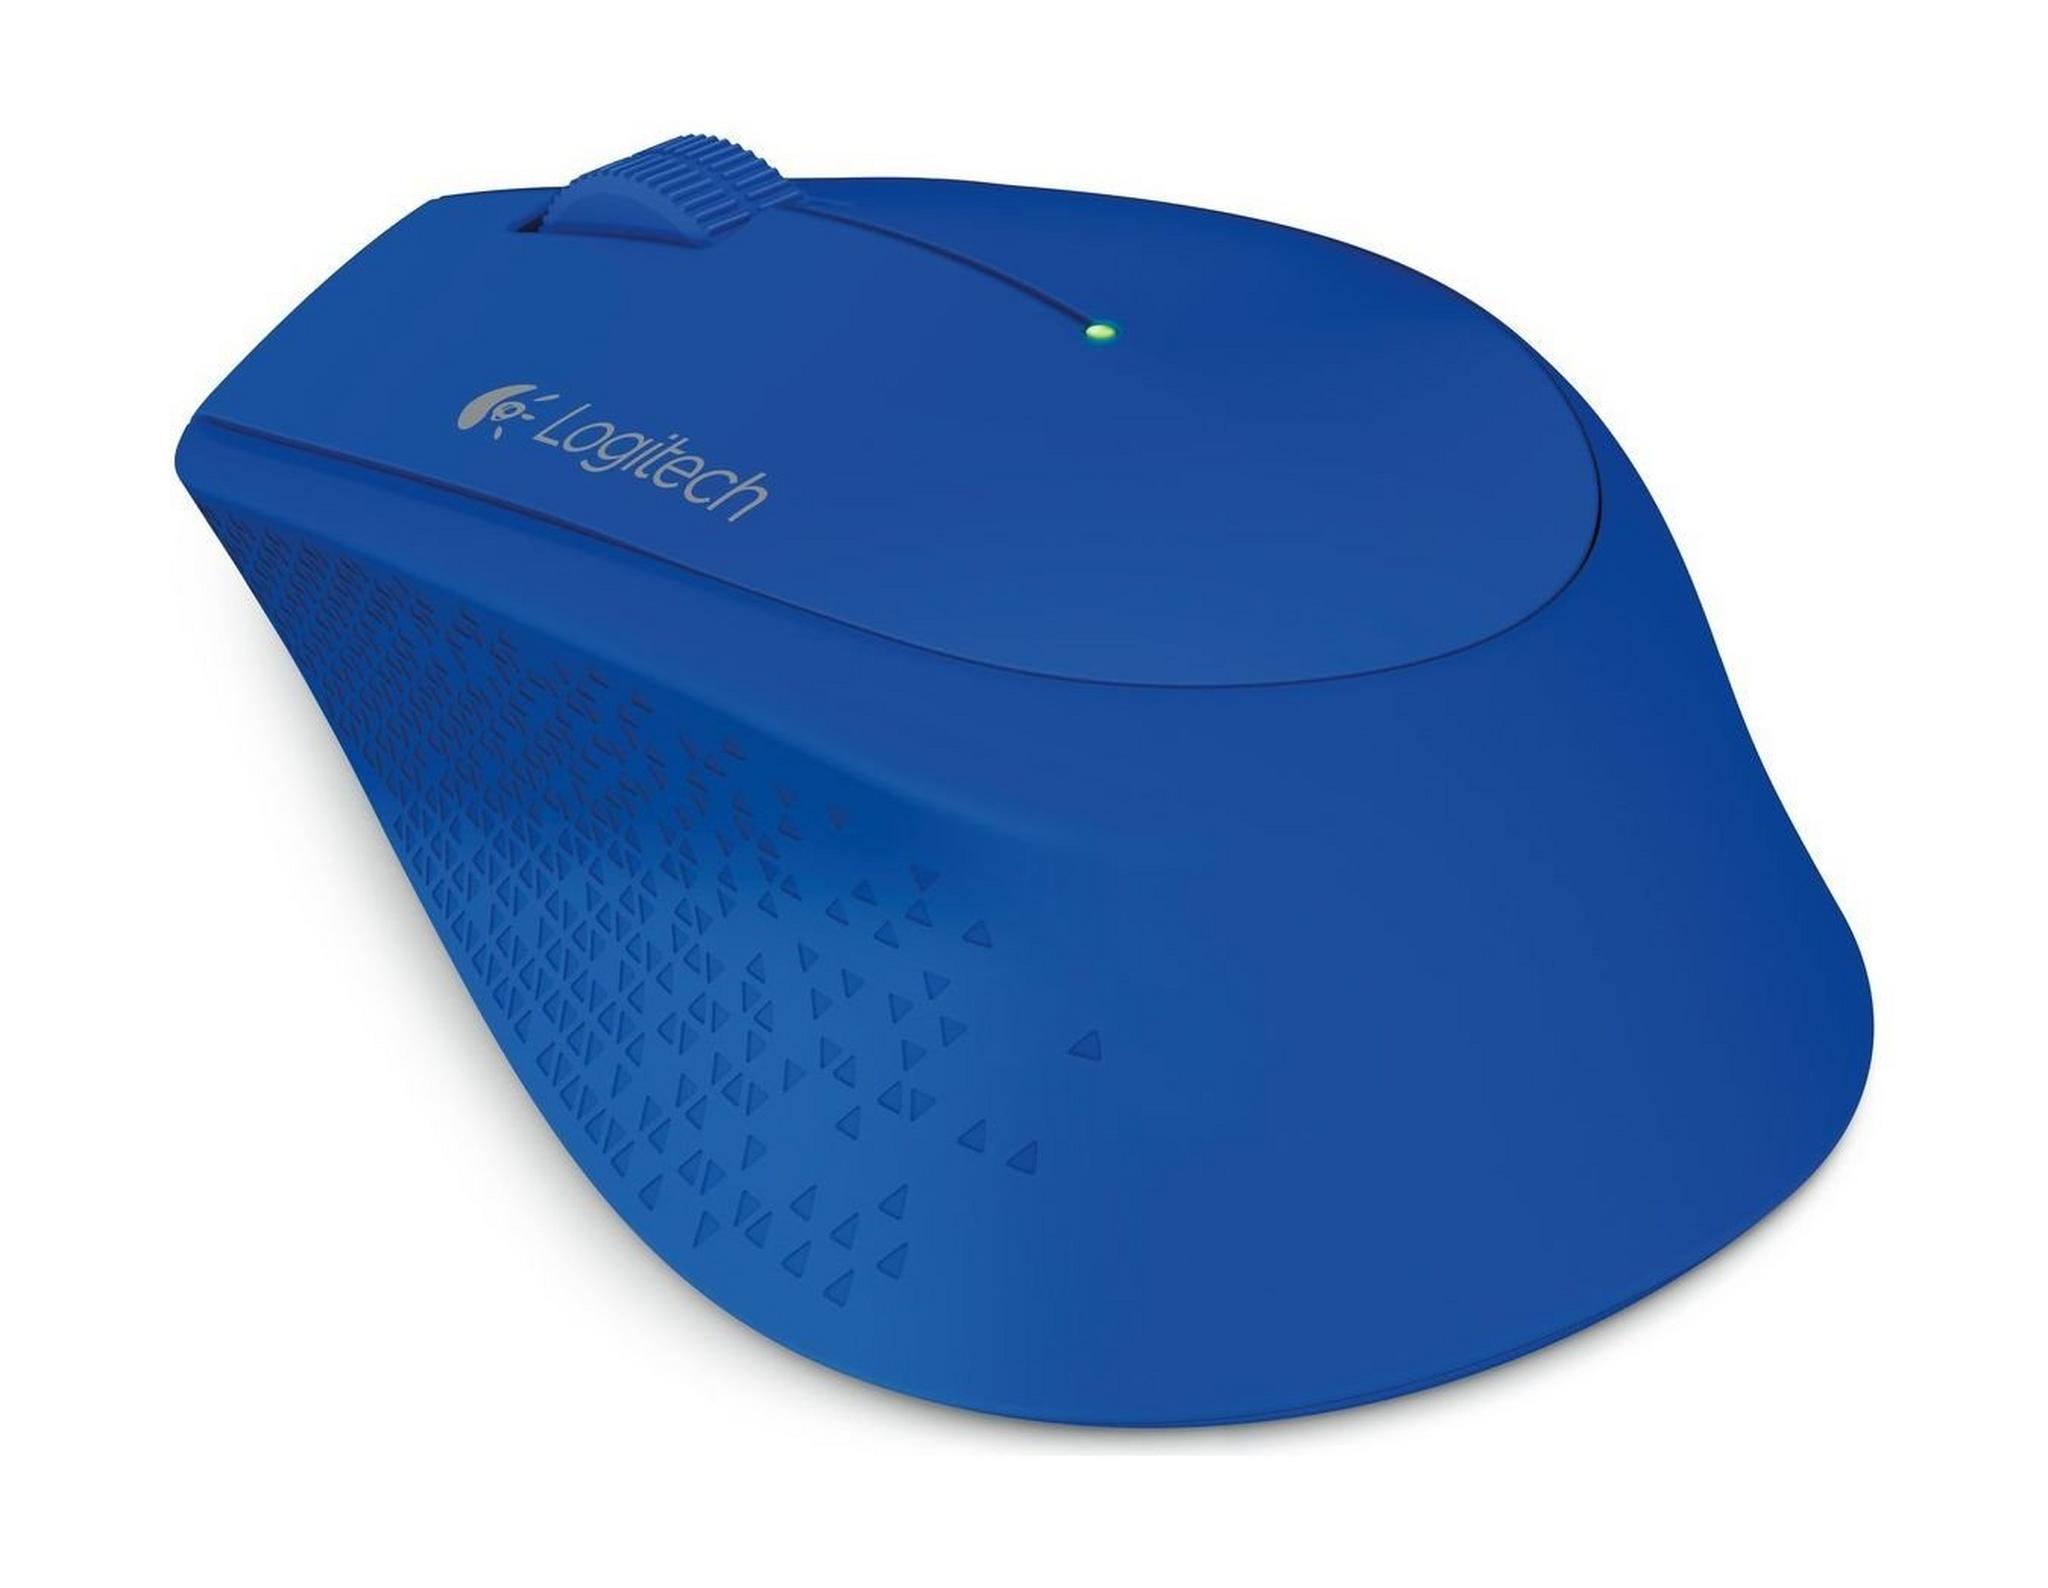 Logitech M280 Wireless Optical Mouse – Blue